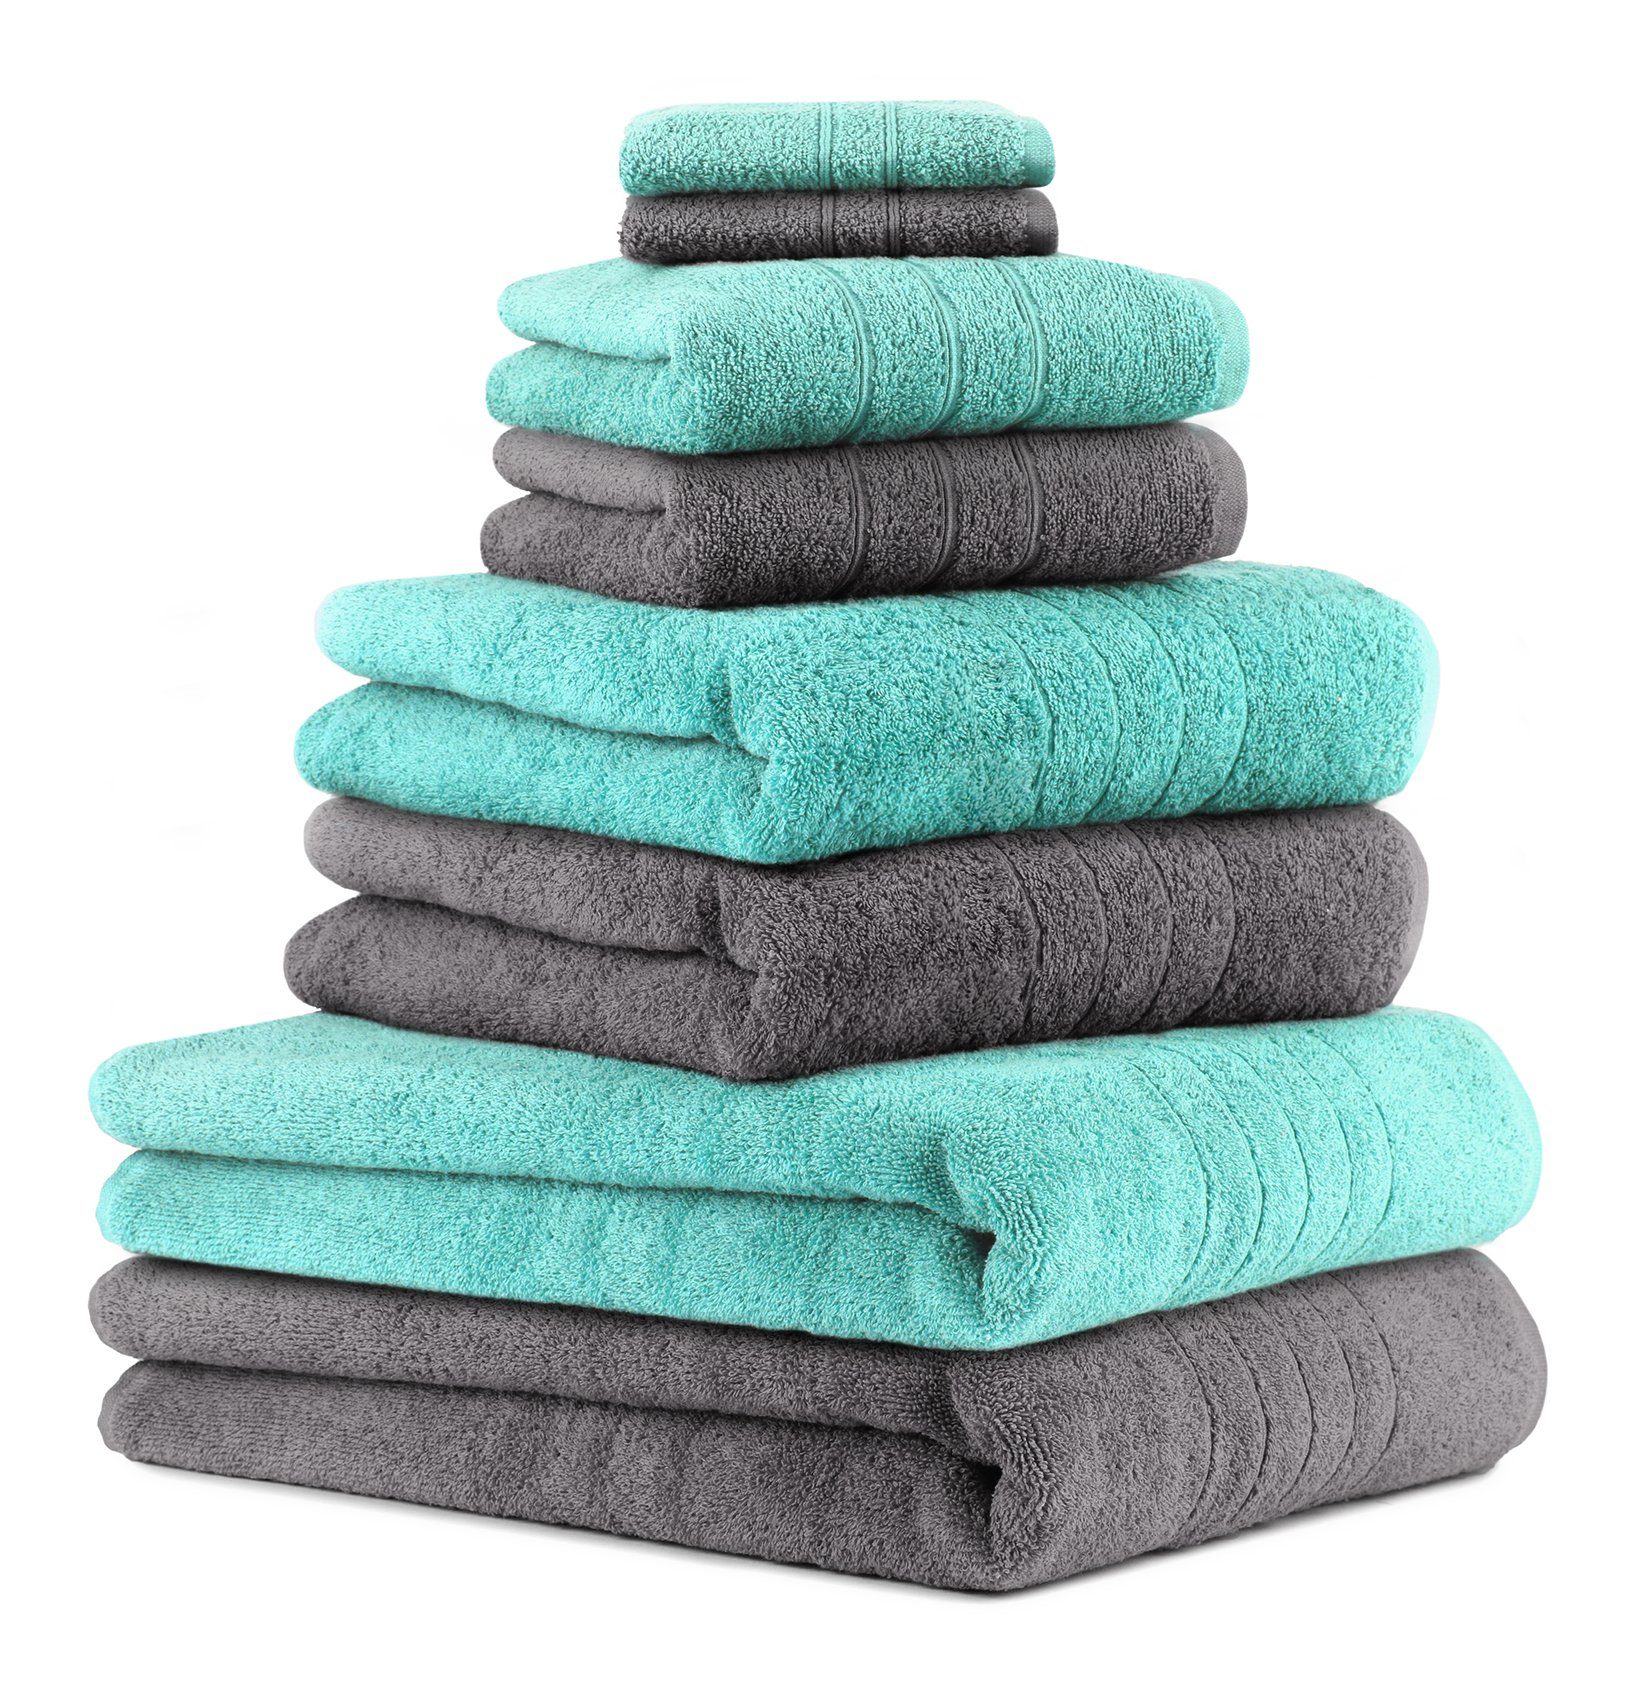 Farbe türkis, Baumwolle, 100% anthrazit Baumwolle Handtuch-Set Set grau Seiftücher Badetücher 2 Betz 2 2 Duschtücher 100% Deluxe Handtücher Handtuch 8-TLG. und (8-tlg) 2